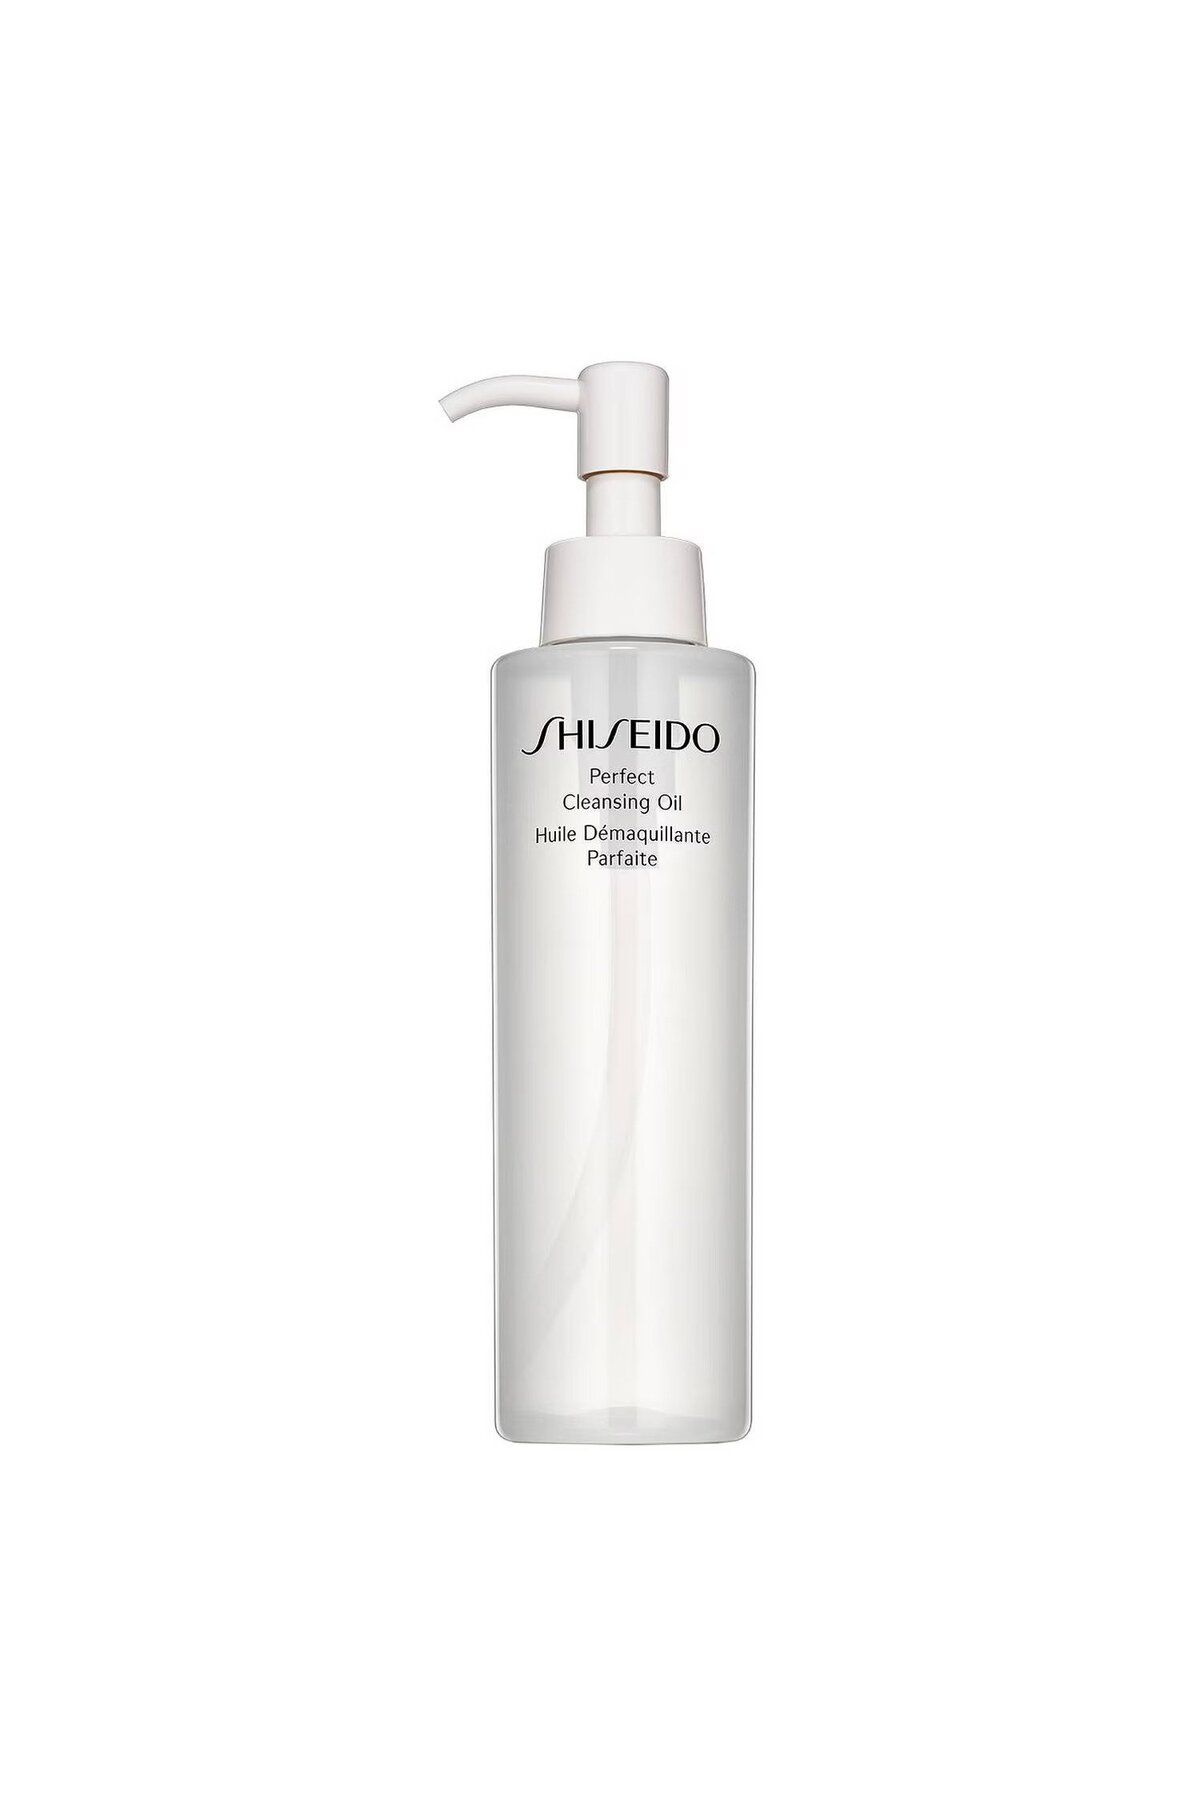 Shiseido روغن پاک‌کننده کامل پاک‌کننده آرایش برای صورت، چشم و لب‌ها 180 میلی‌لیتر